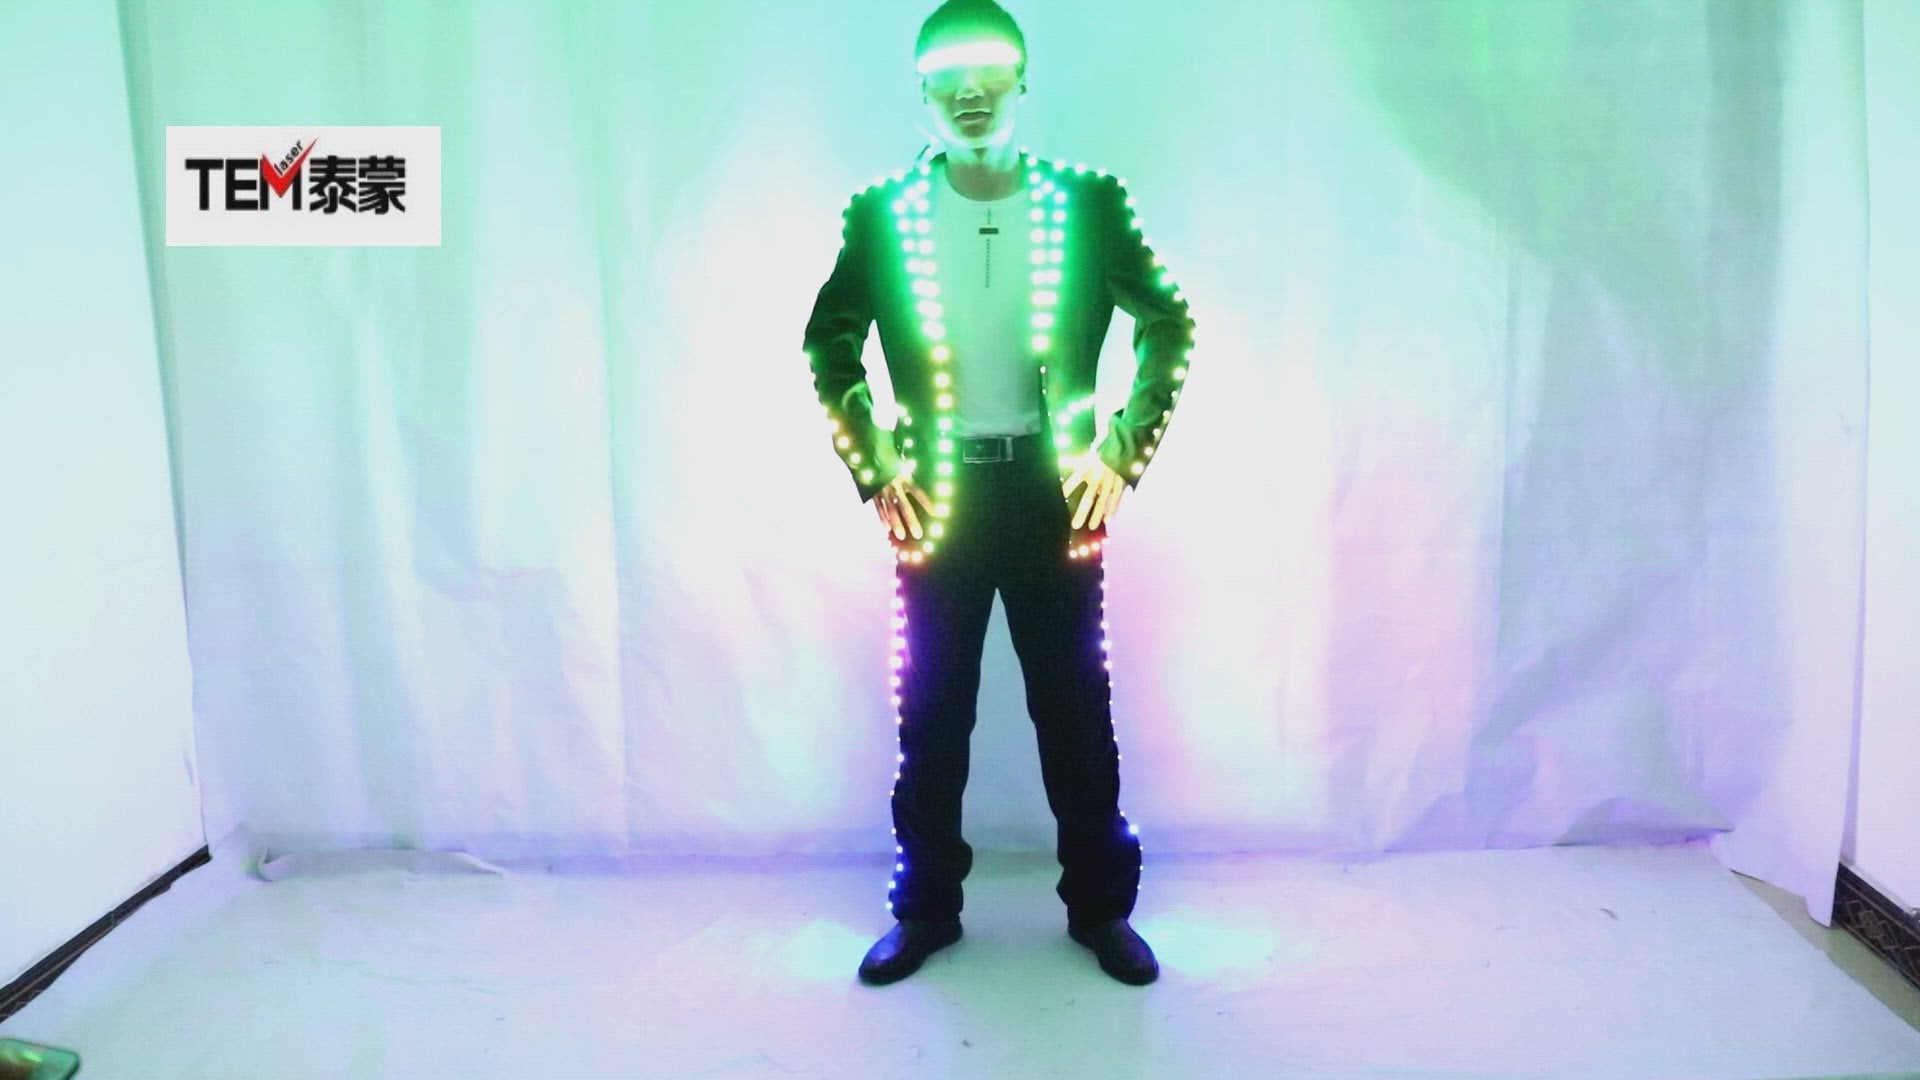 Digitale Vollfarb-LED-Anzug Fernbedienung LED Jacke für Bar Hosting, Hochzeit Herren Kleid Kostüm Tron Anzug